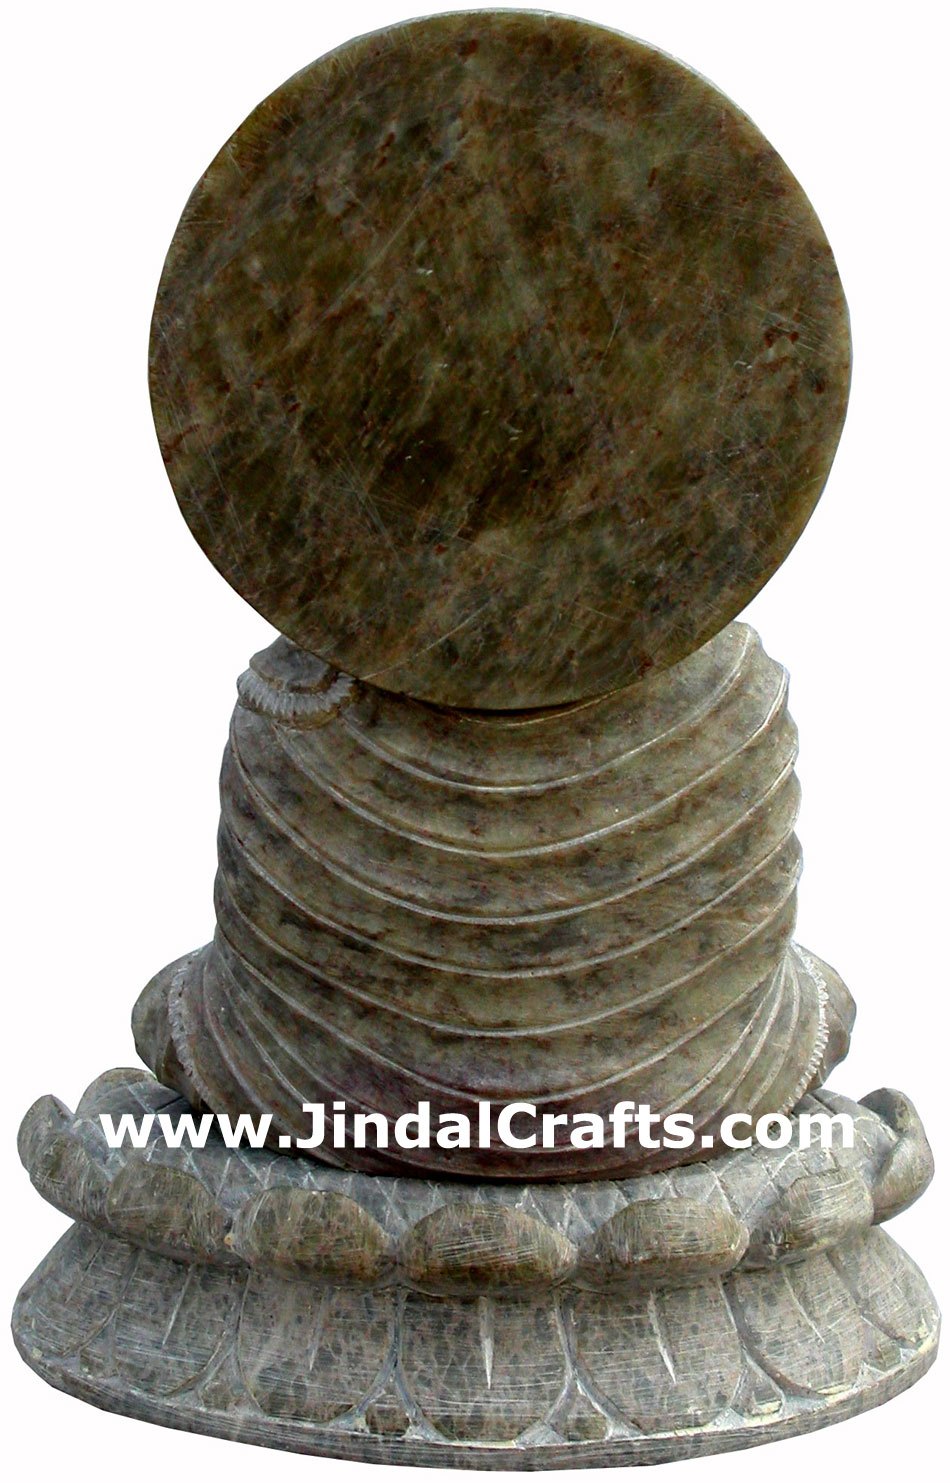 Lord Buddha Hand Carved Indian Art Craft Handicrafts Home Decor Stone Figurines